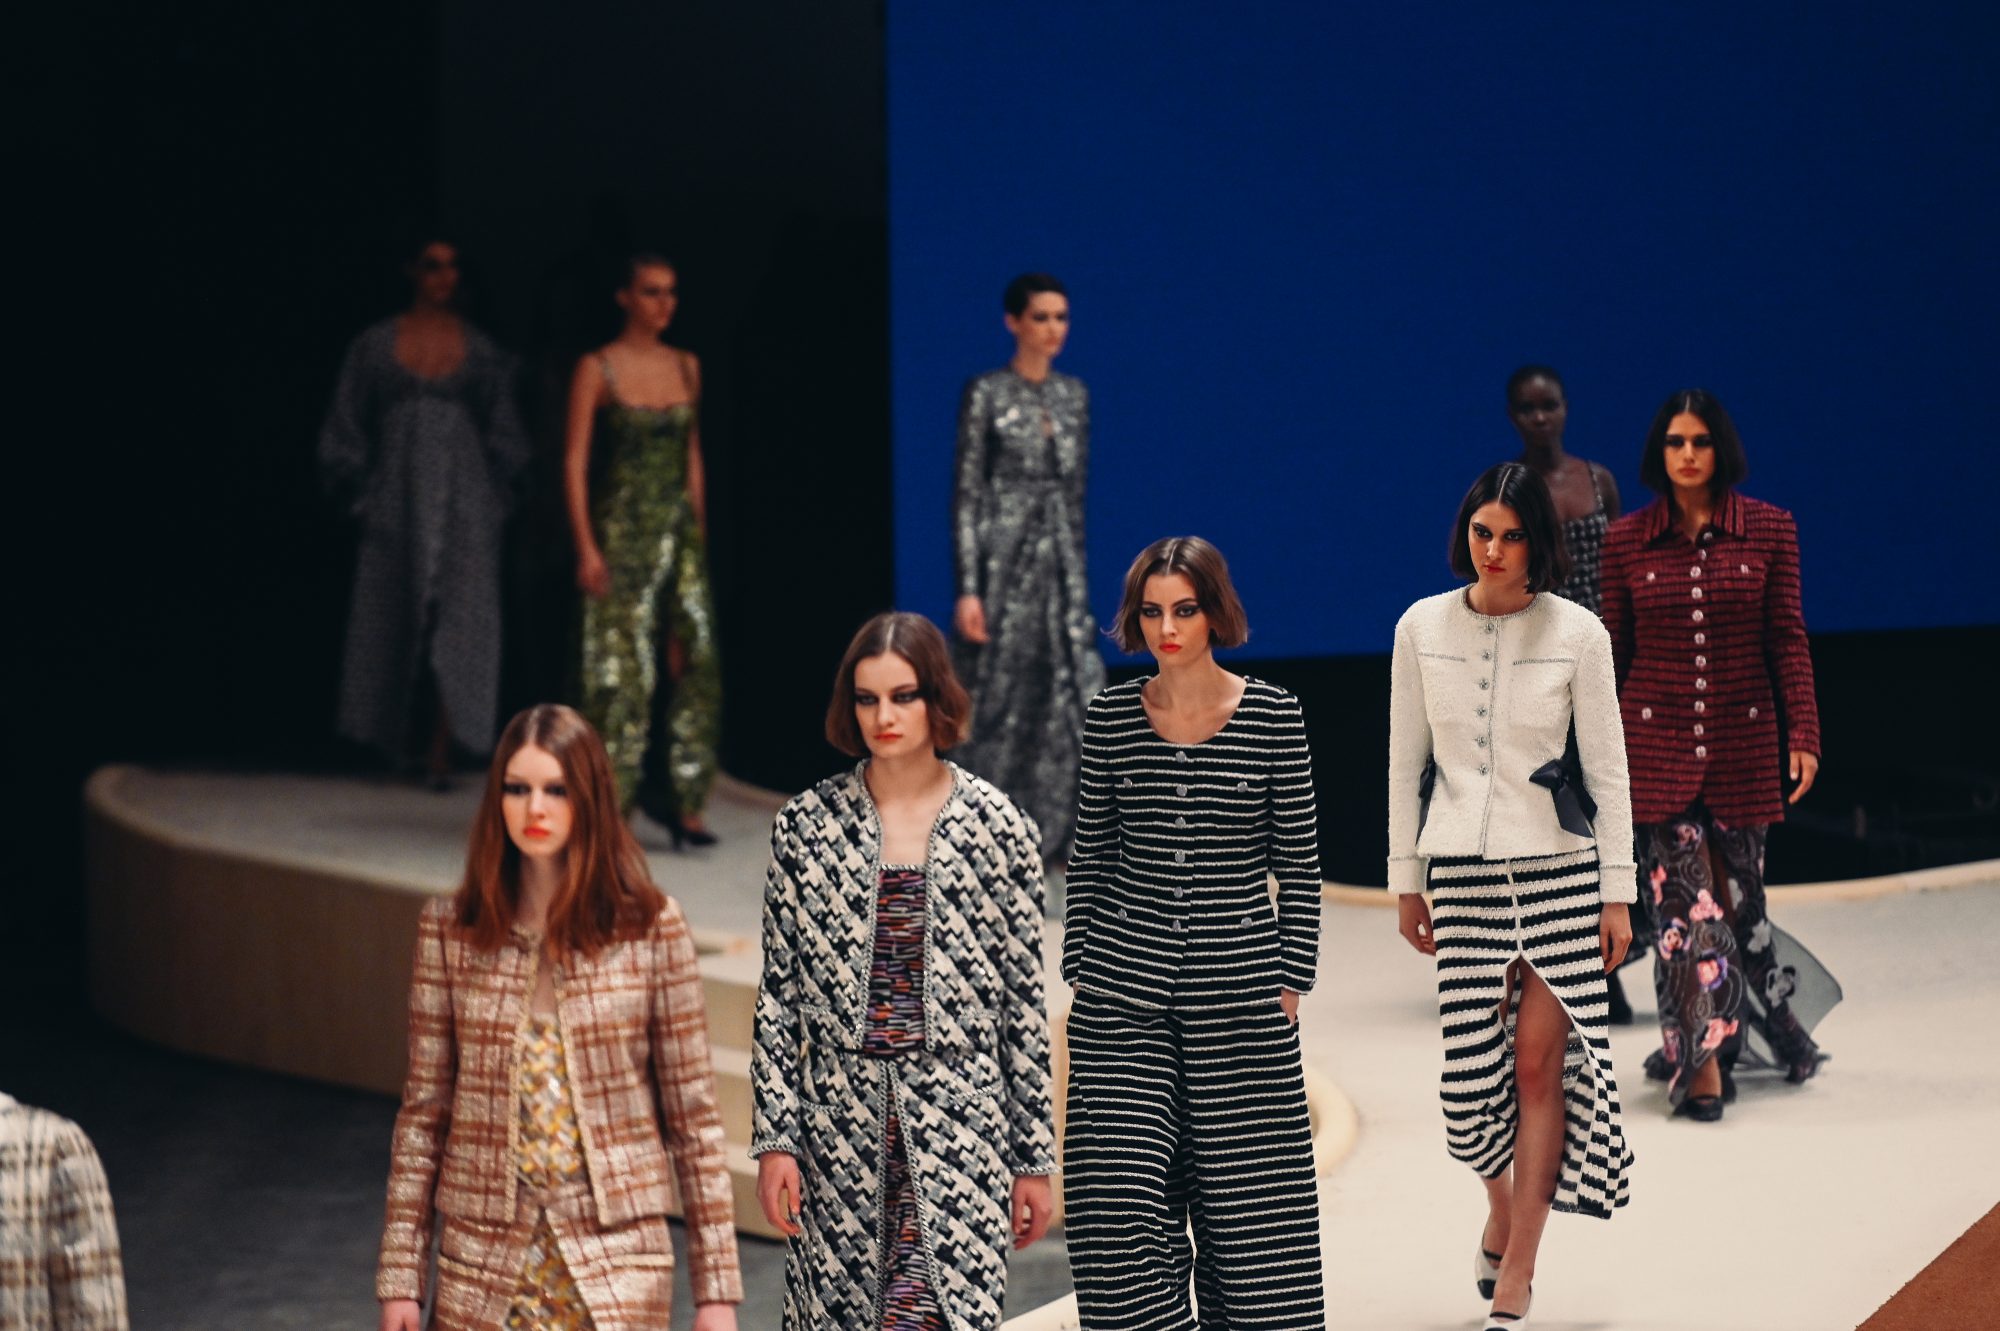 Chanel Couture SS22: Μια συλλογή υψηλής ραπτικής που τιμά την “αιθέρια ελαφρότητα” Την haute couture συλλογή του για την Άνοιξη - Καλοκαίρι 2022 παρουσίασε ο οίκος Chanel στο Παρίσι, στα πλαίσια της Εβδομάδα Μόδας Υψηλής Ραπτικής, με τις αιθέριες δημιουργίες της καλλιτεχνικής διευθύντριας του, Virginie Viard, να αναδεικνύουν τη μοντέρνα θηλυκότητα σε βασική πρωταγωνίστρια στη μόδα της προσεχούς σεζόν.